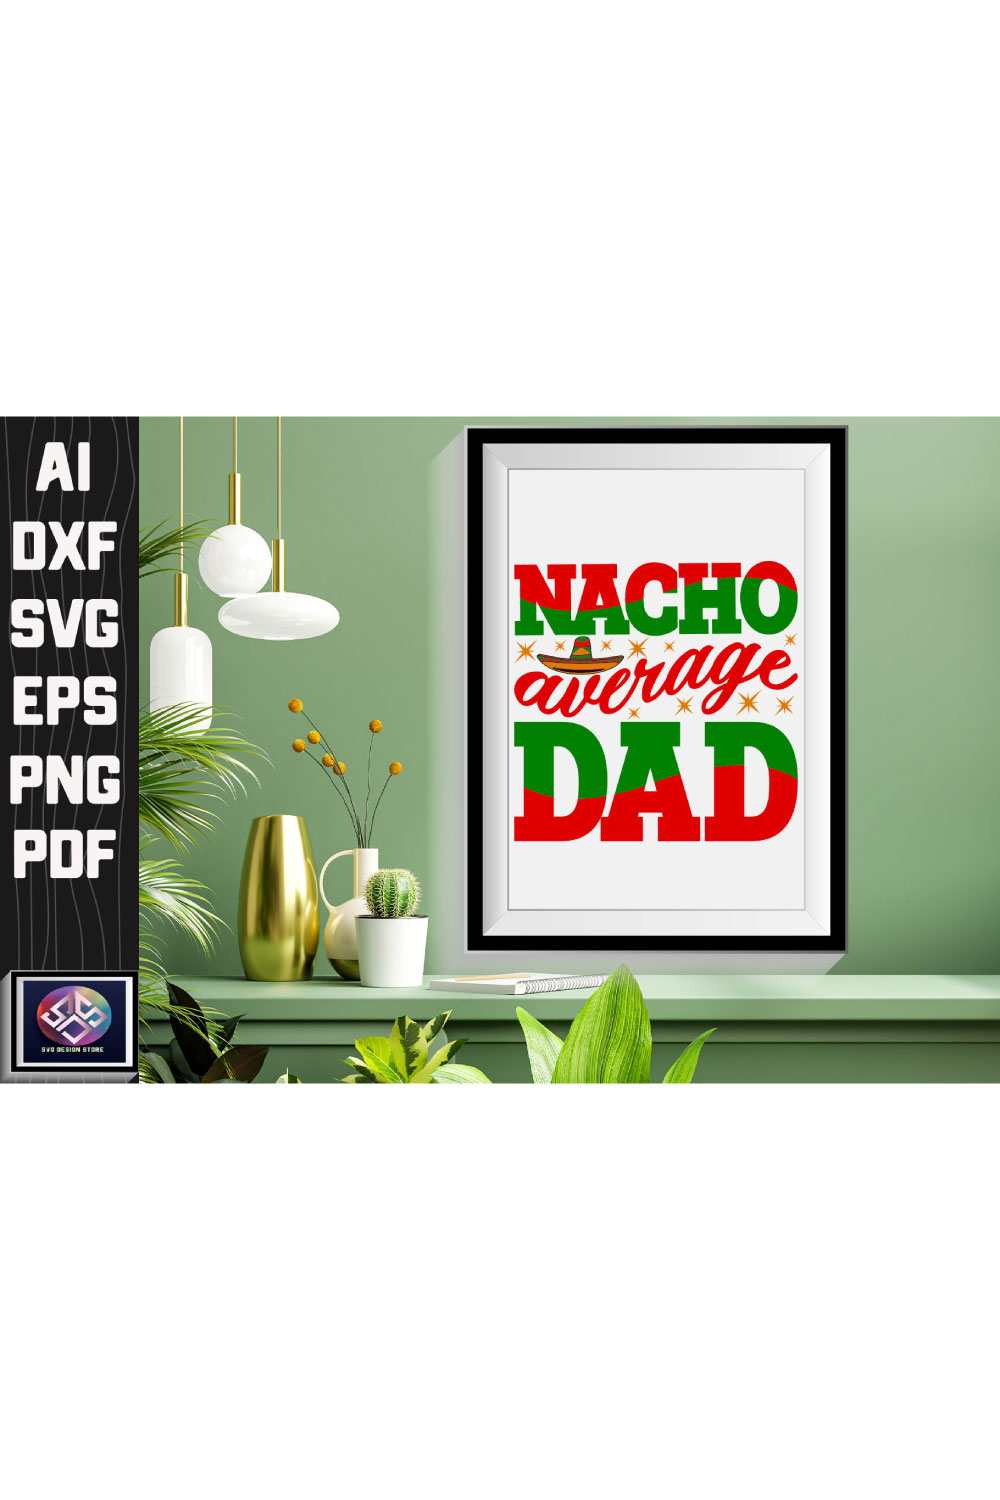 Nacho Average Dad pinterest preview image.